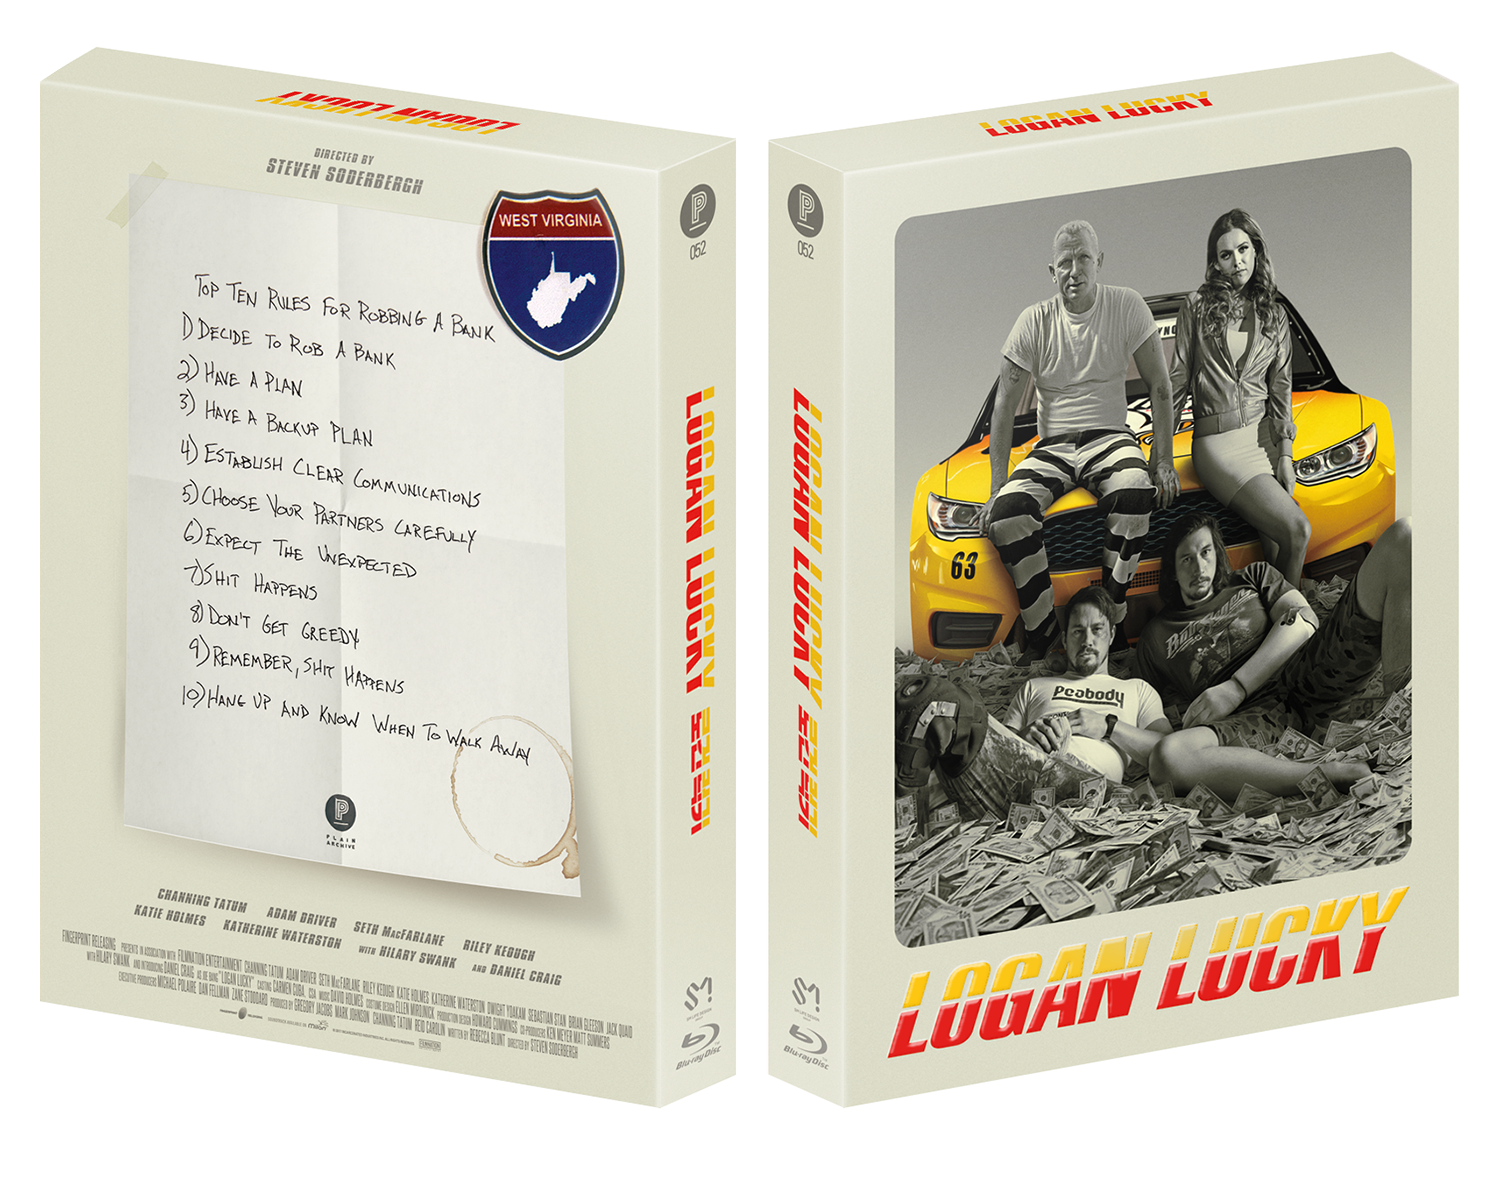 LOGAN LUCKY Blu-ray Steelbook: Dual Pack